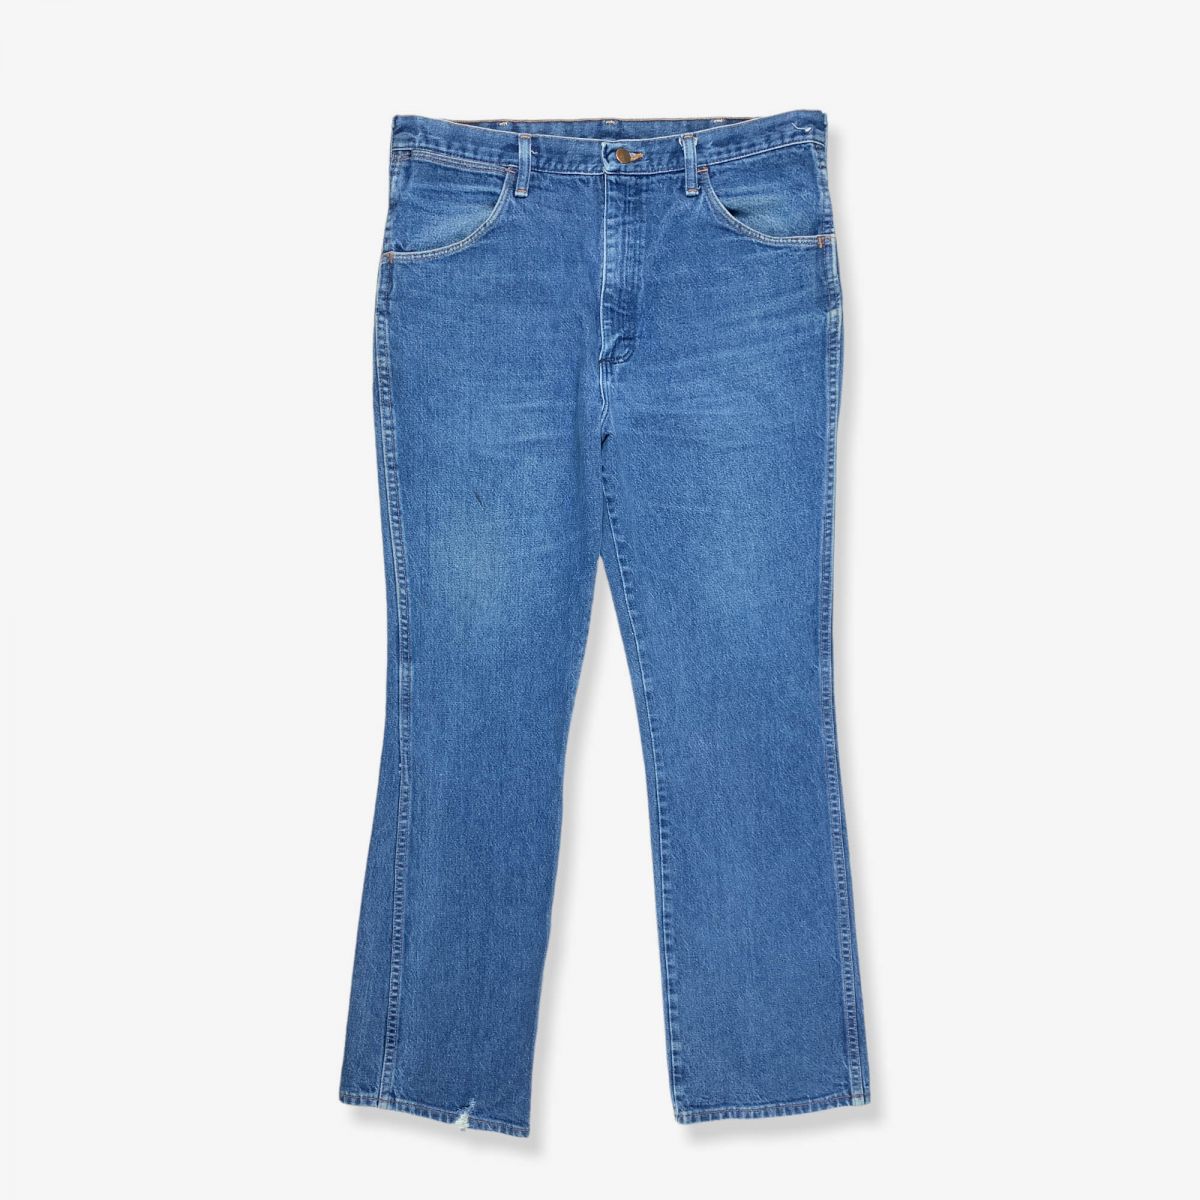 935NAV / Men's Wrangler® Boot Cut Slim Fit Jean